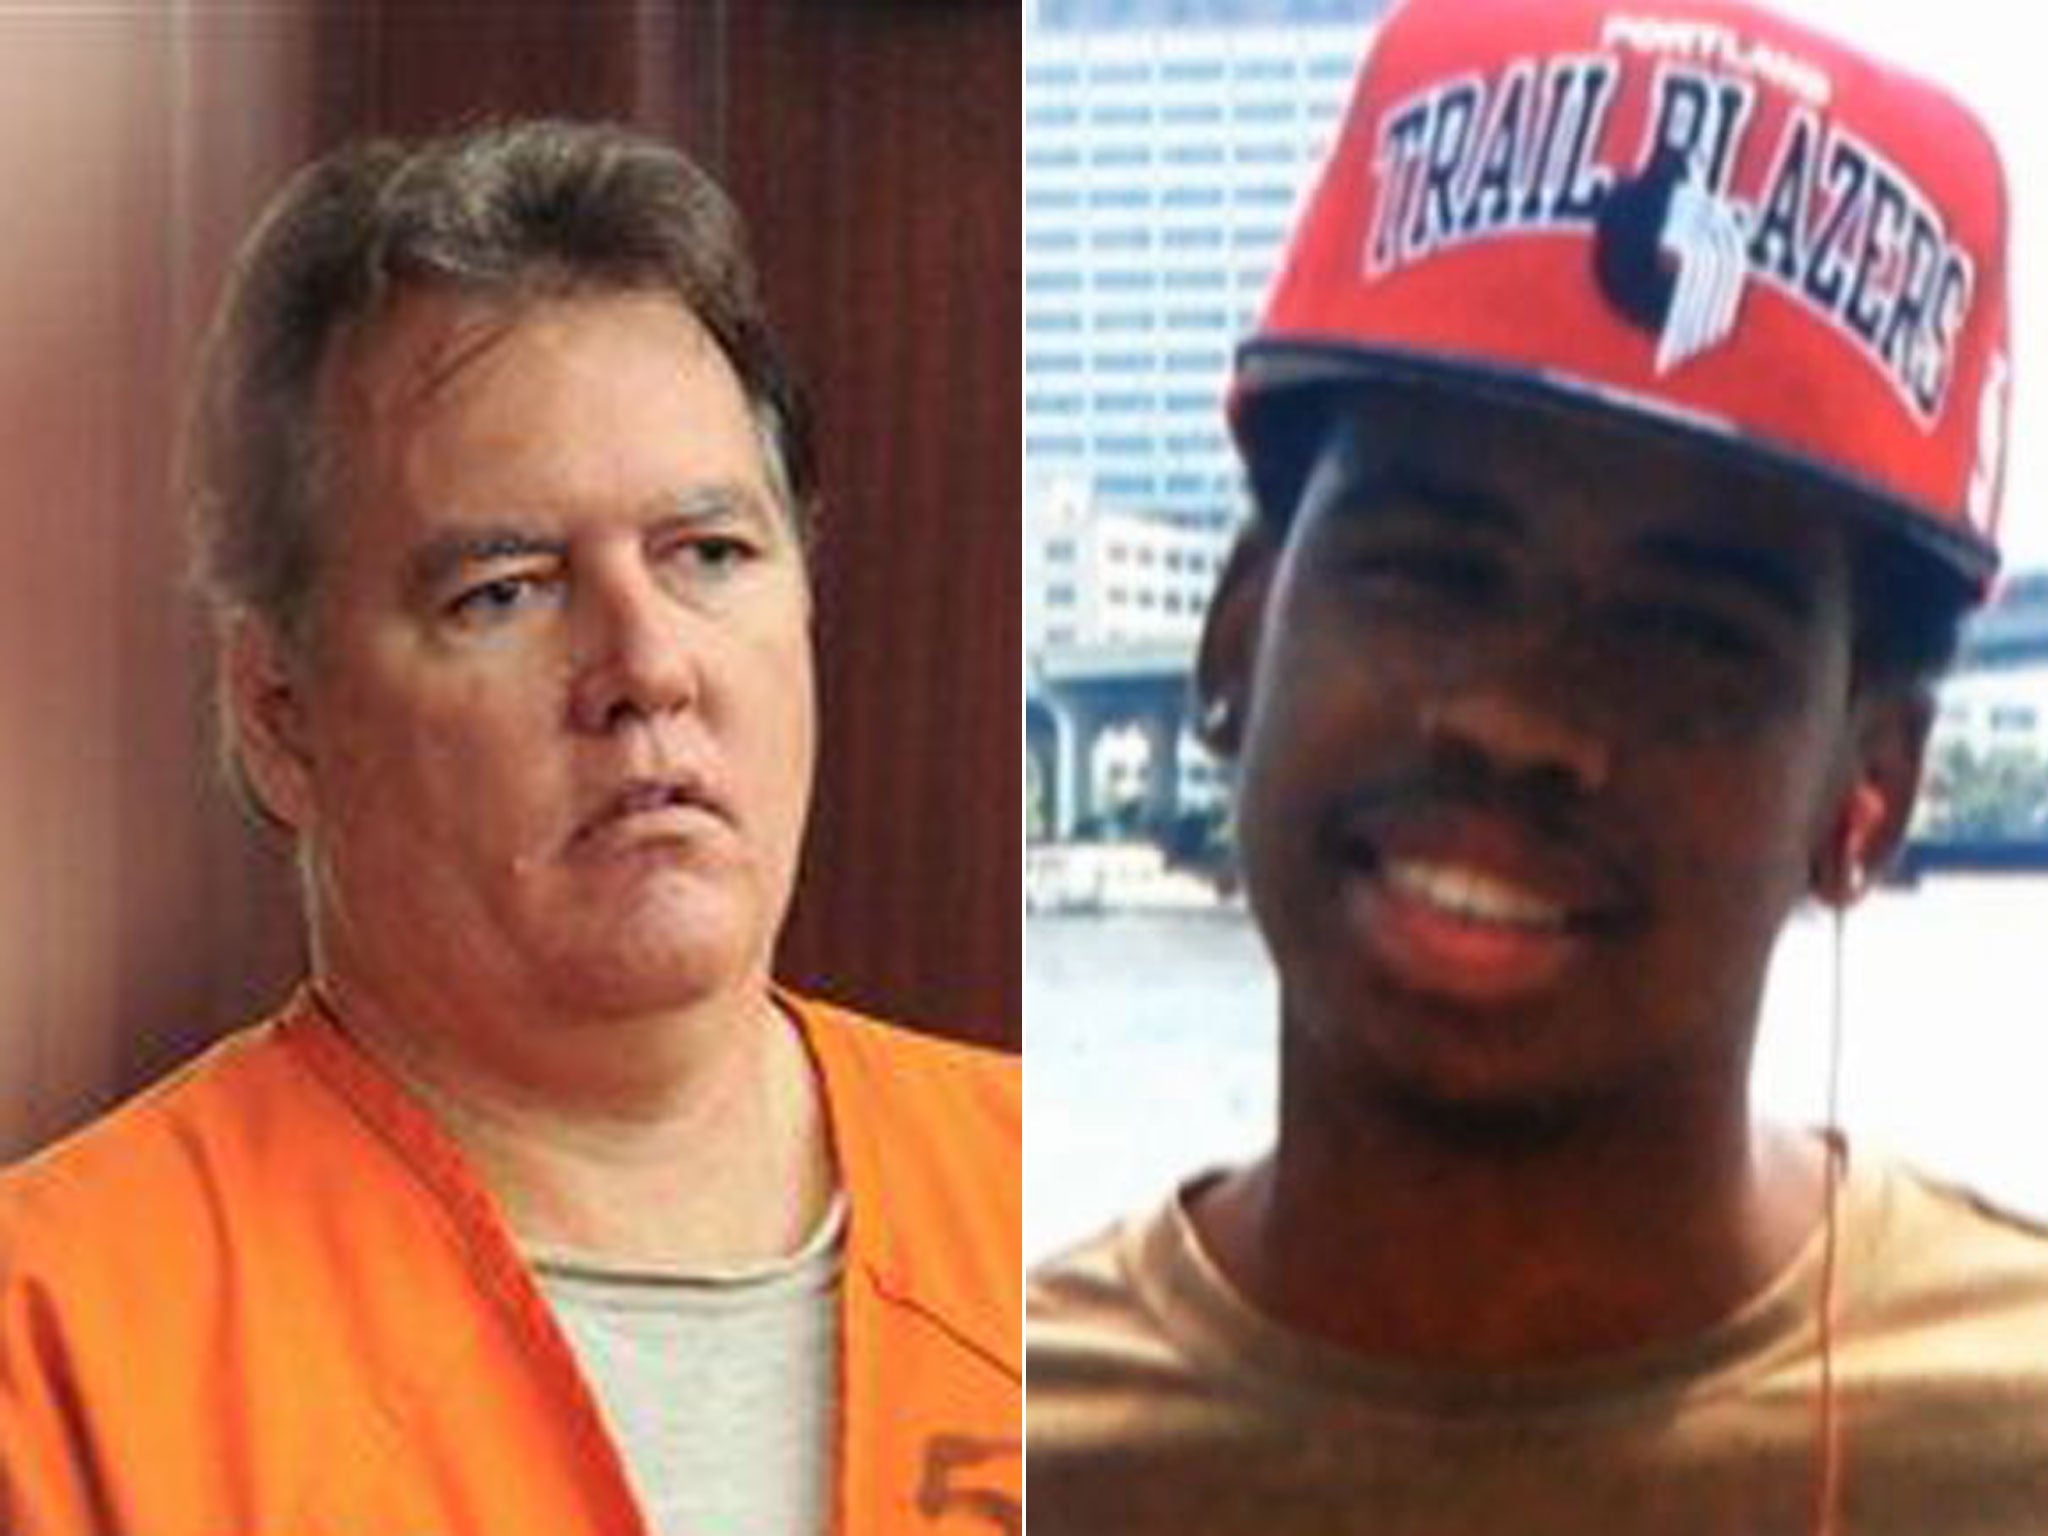 Michael Dunn, left, stands accused of murdering Jordan Davis, right